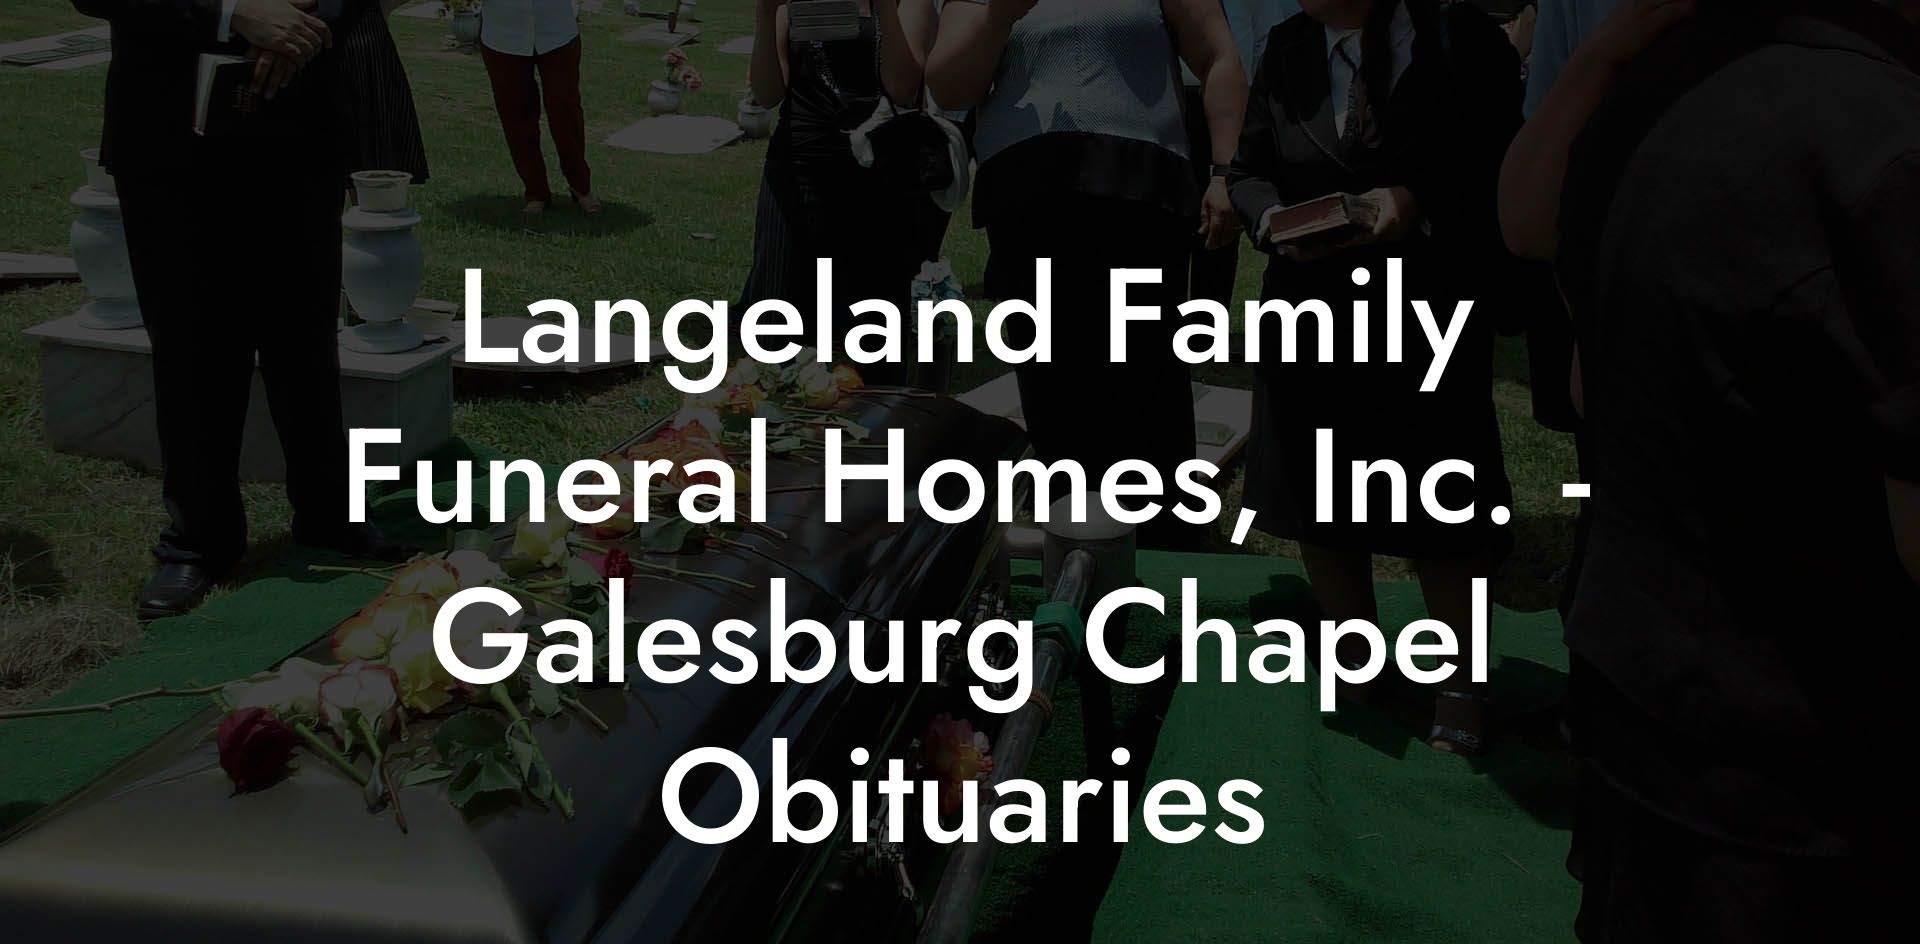 Langeland Family Funeral Homes, Inc. - Galesburg Chapel Obituaries